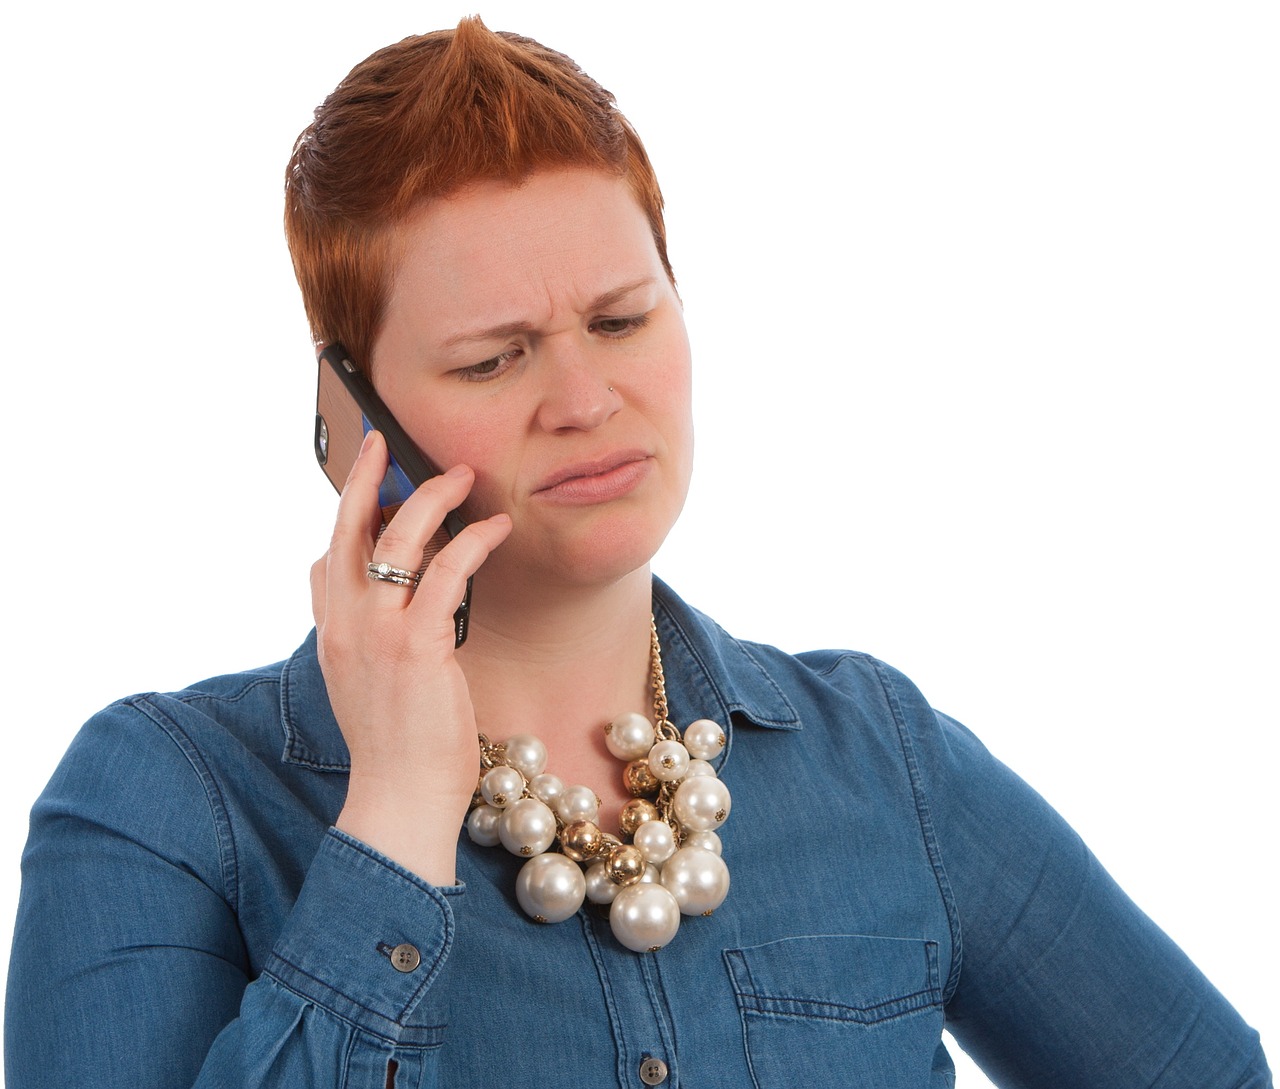 a woman making a phone call